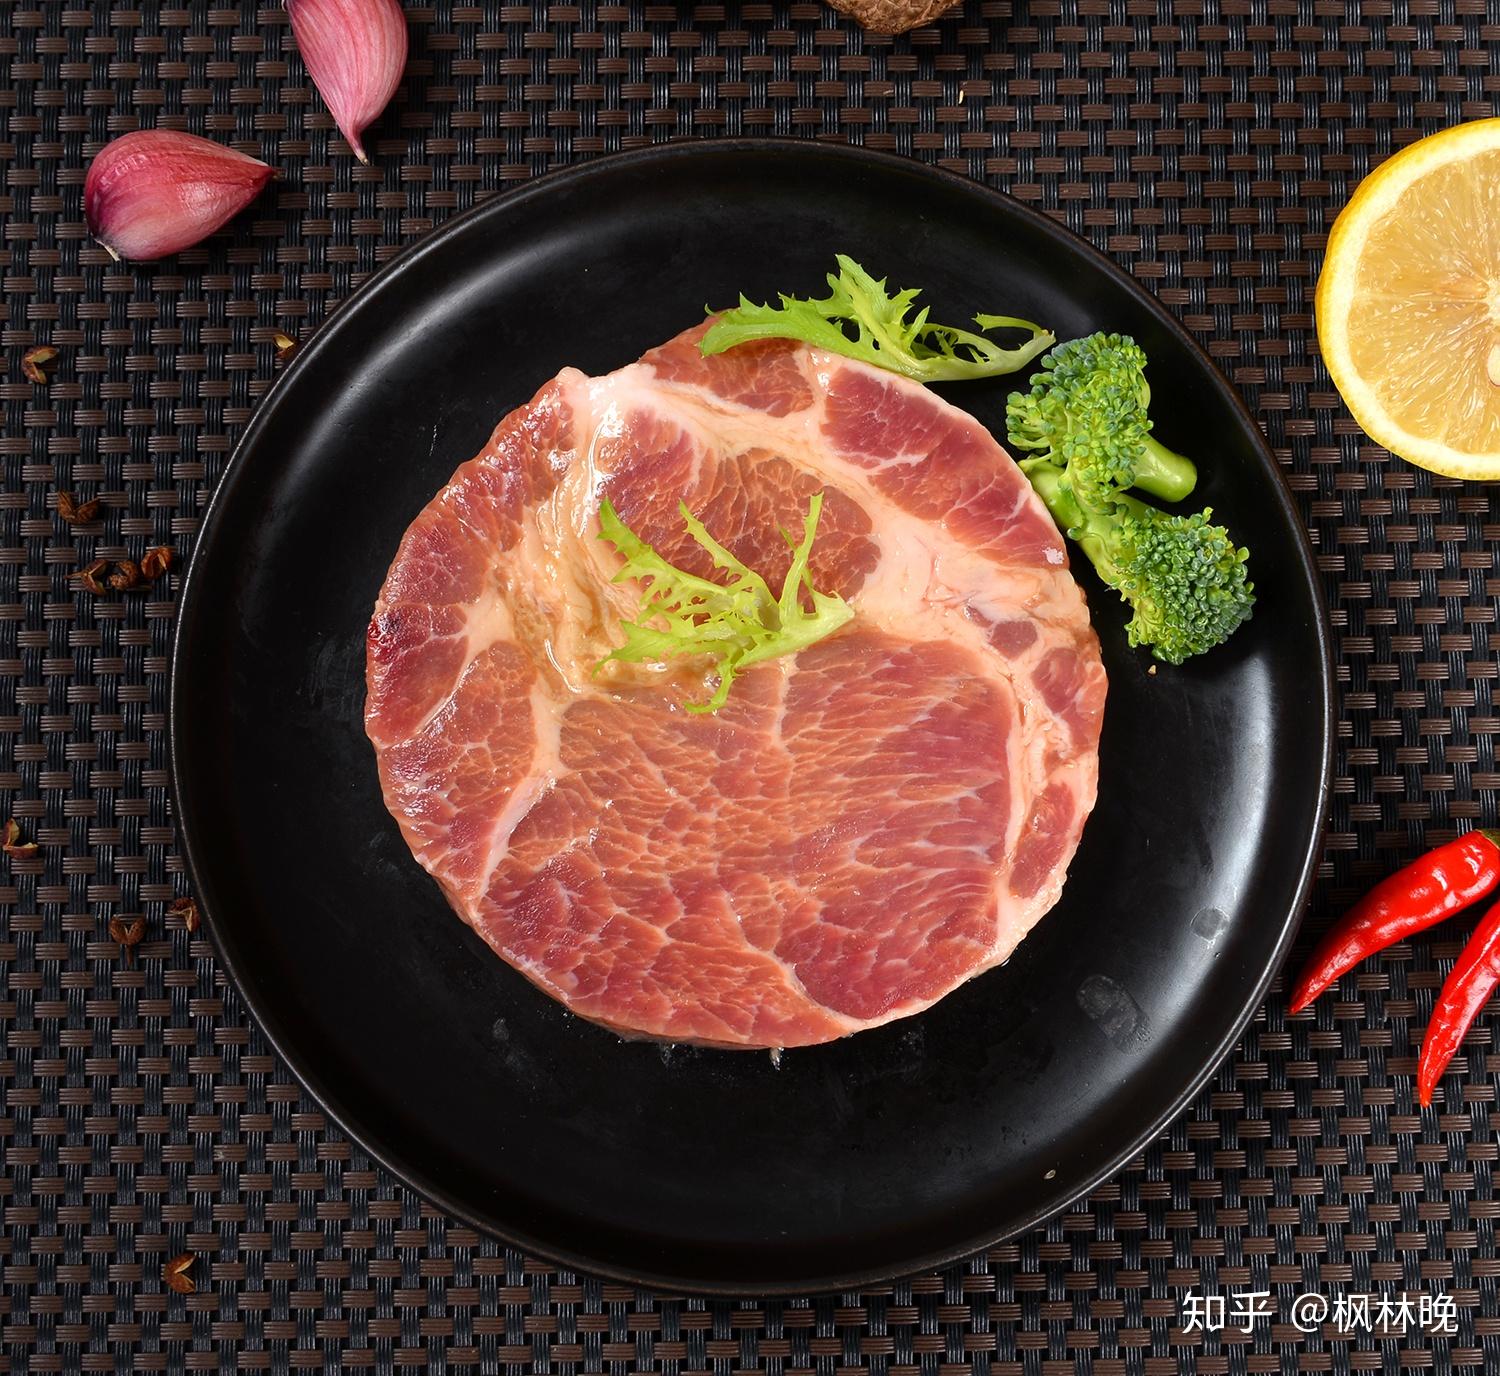 Supreme Sliced Pork Jerky 顶级雪花切片猪肉干 – Muar Yuen Chen Siang 麻坡源珍香